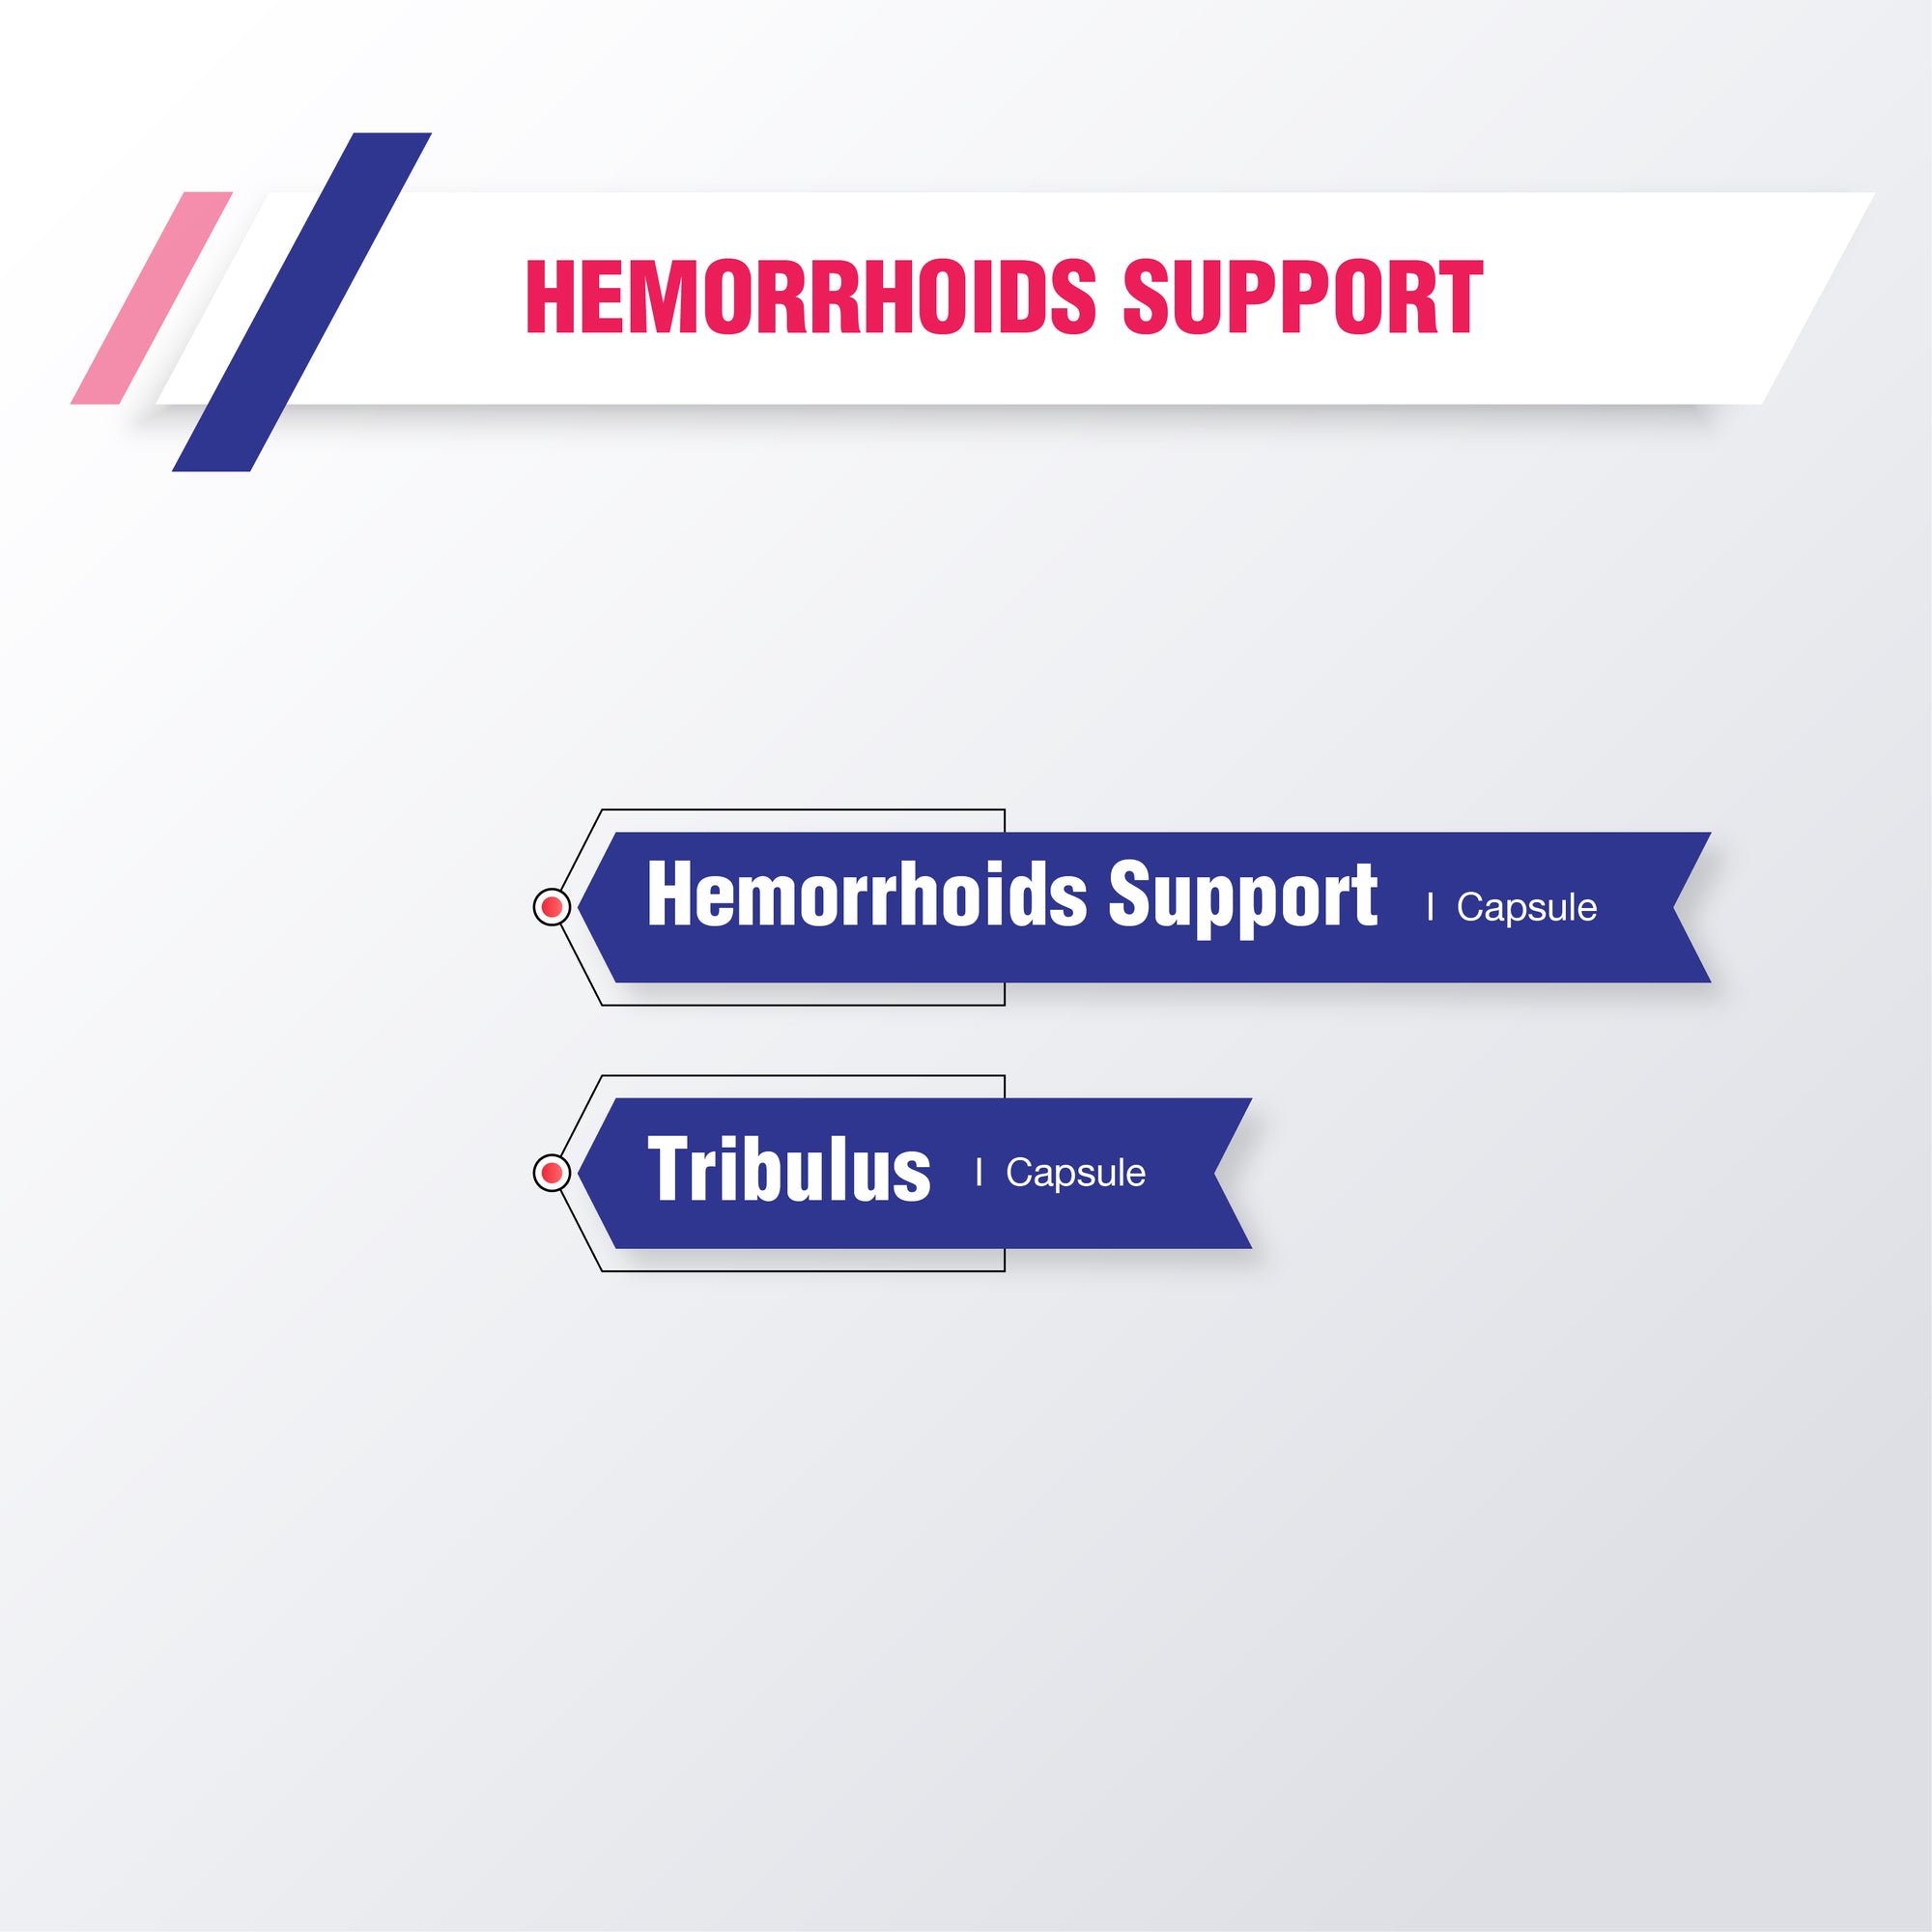 Hemorrhoids support